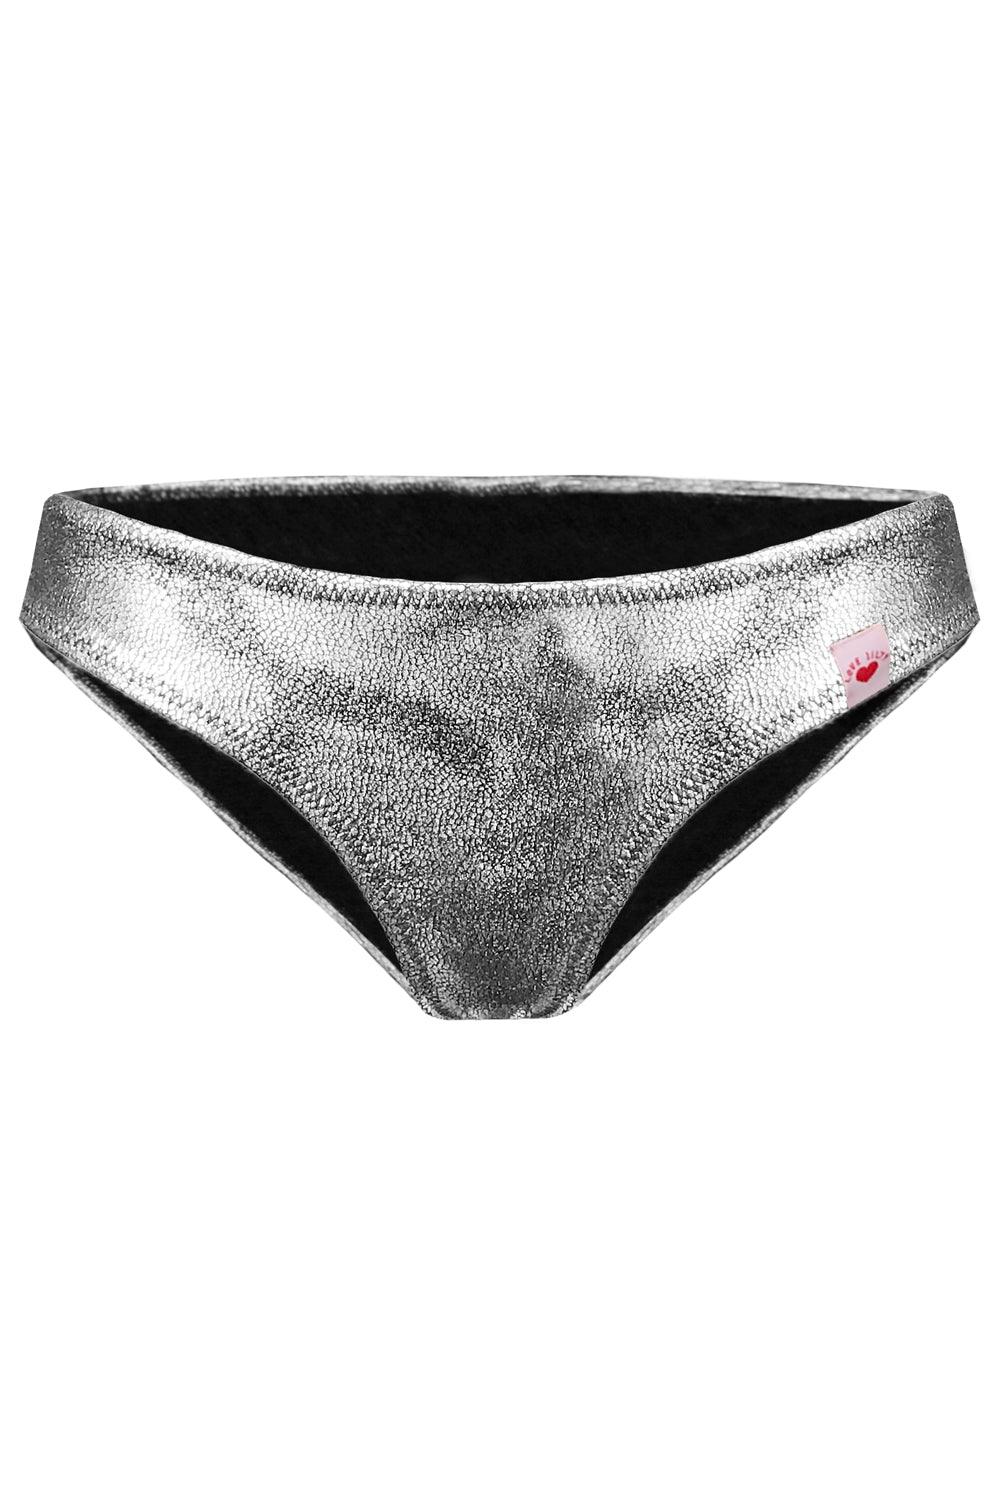 Amelia Silver bikini bottom - Bikini bottom by Love Jilty. Shop on yesUndress